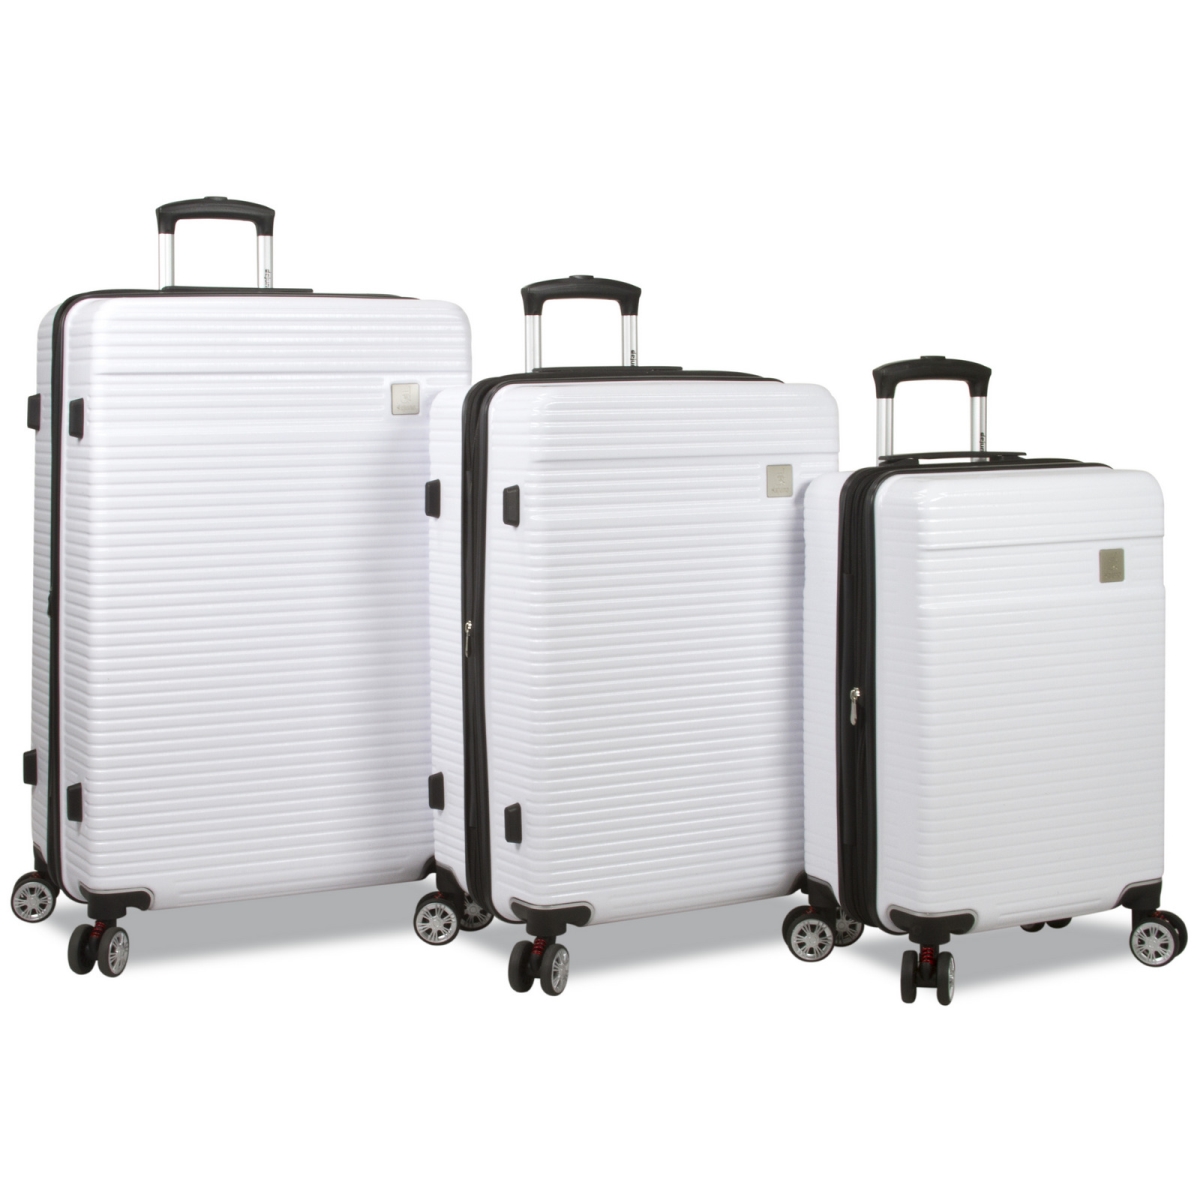 25dj-8275-white Ashford Hardside Spinner Tsa Combination Lock Luggage Set, White - 3 Piece